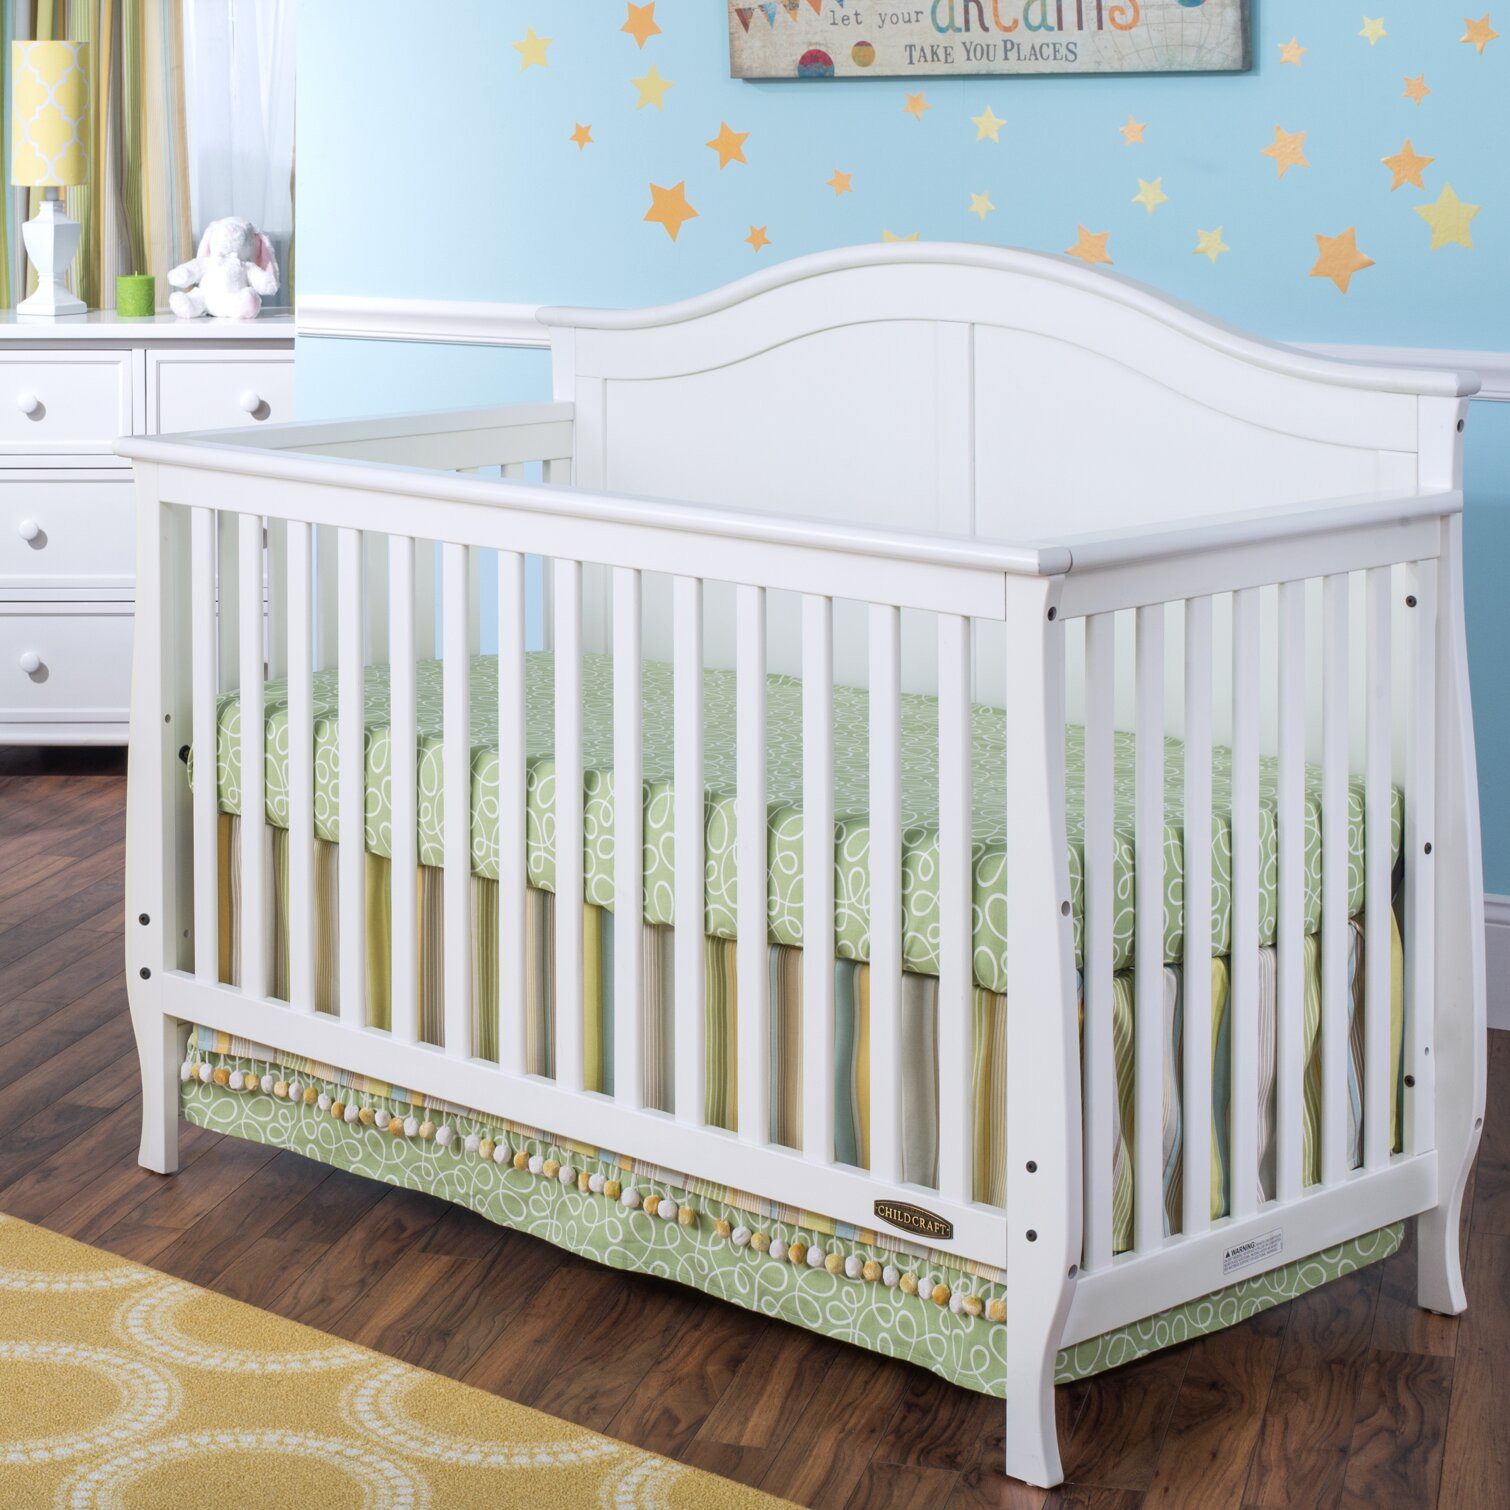 Child Craft Convertible Crib
 Child Craft Camden 4 in 1 Convertible Crib & Reviews